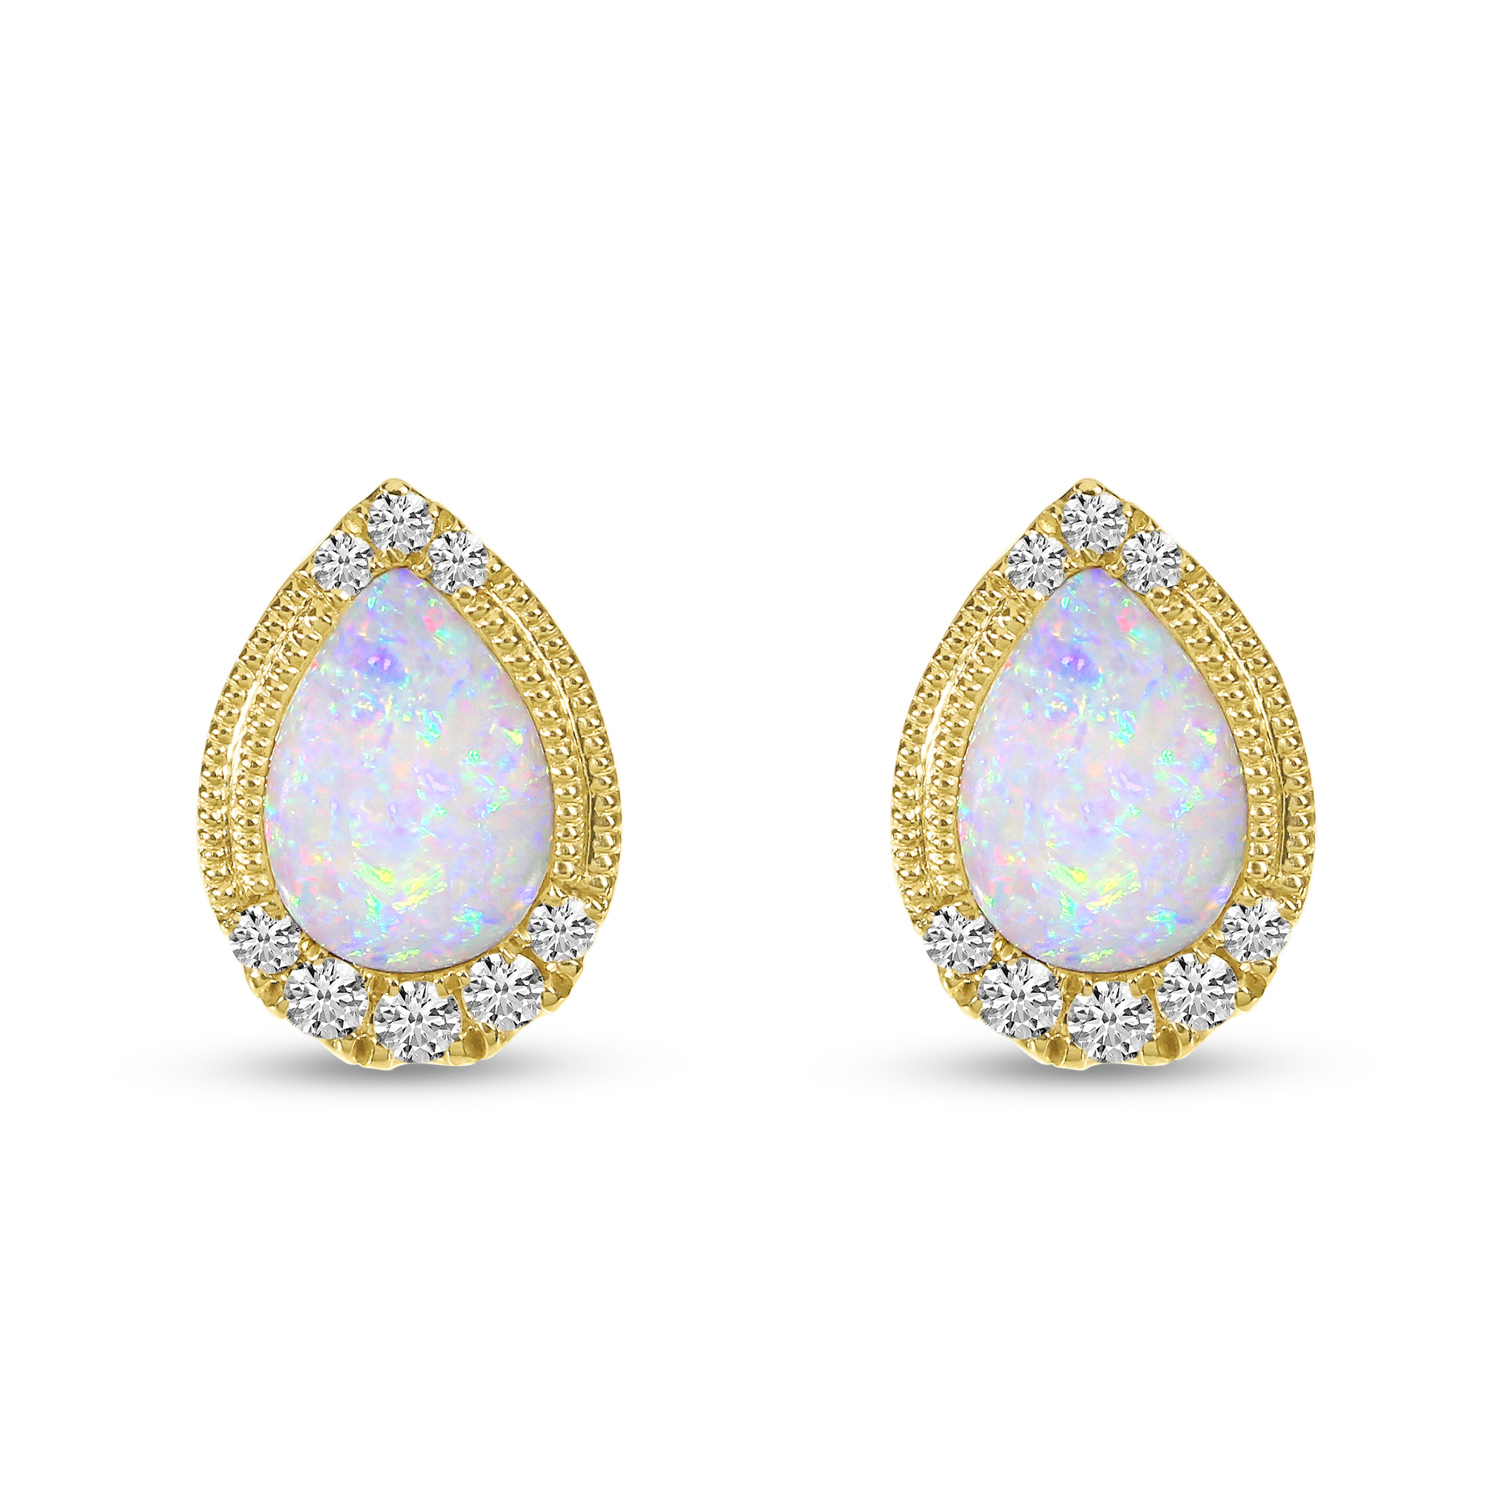 14K Yellow Gold Pear Cut Opal and Diamond Earrings